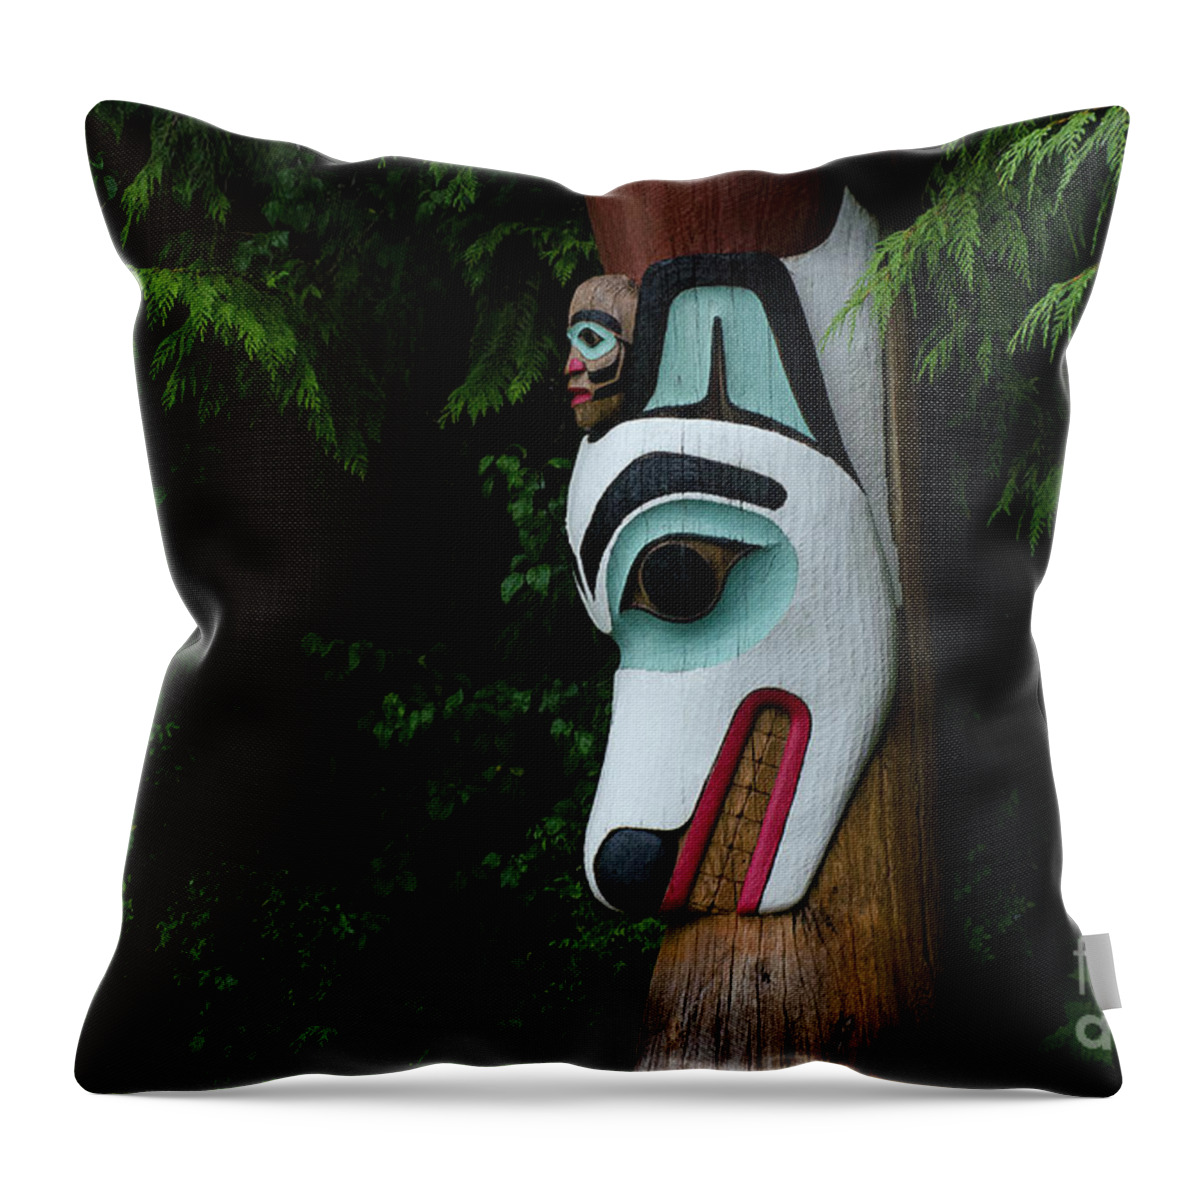 Totem Throw Pillow featuring the photograph Totem Pole Alaska 1 by Bob Christopher